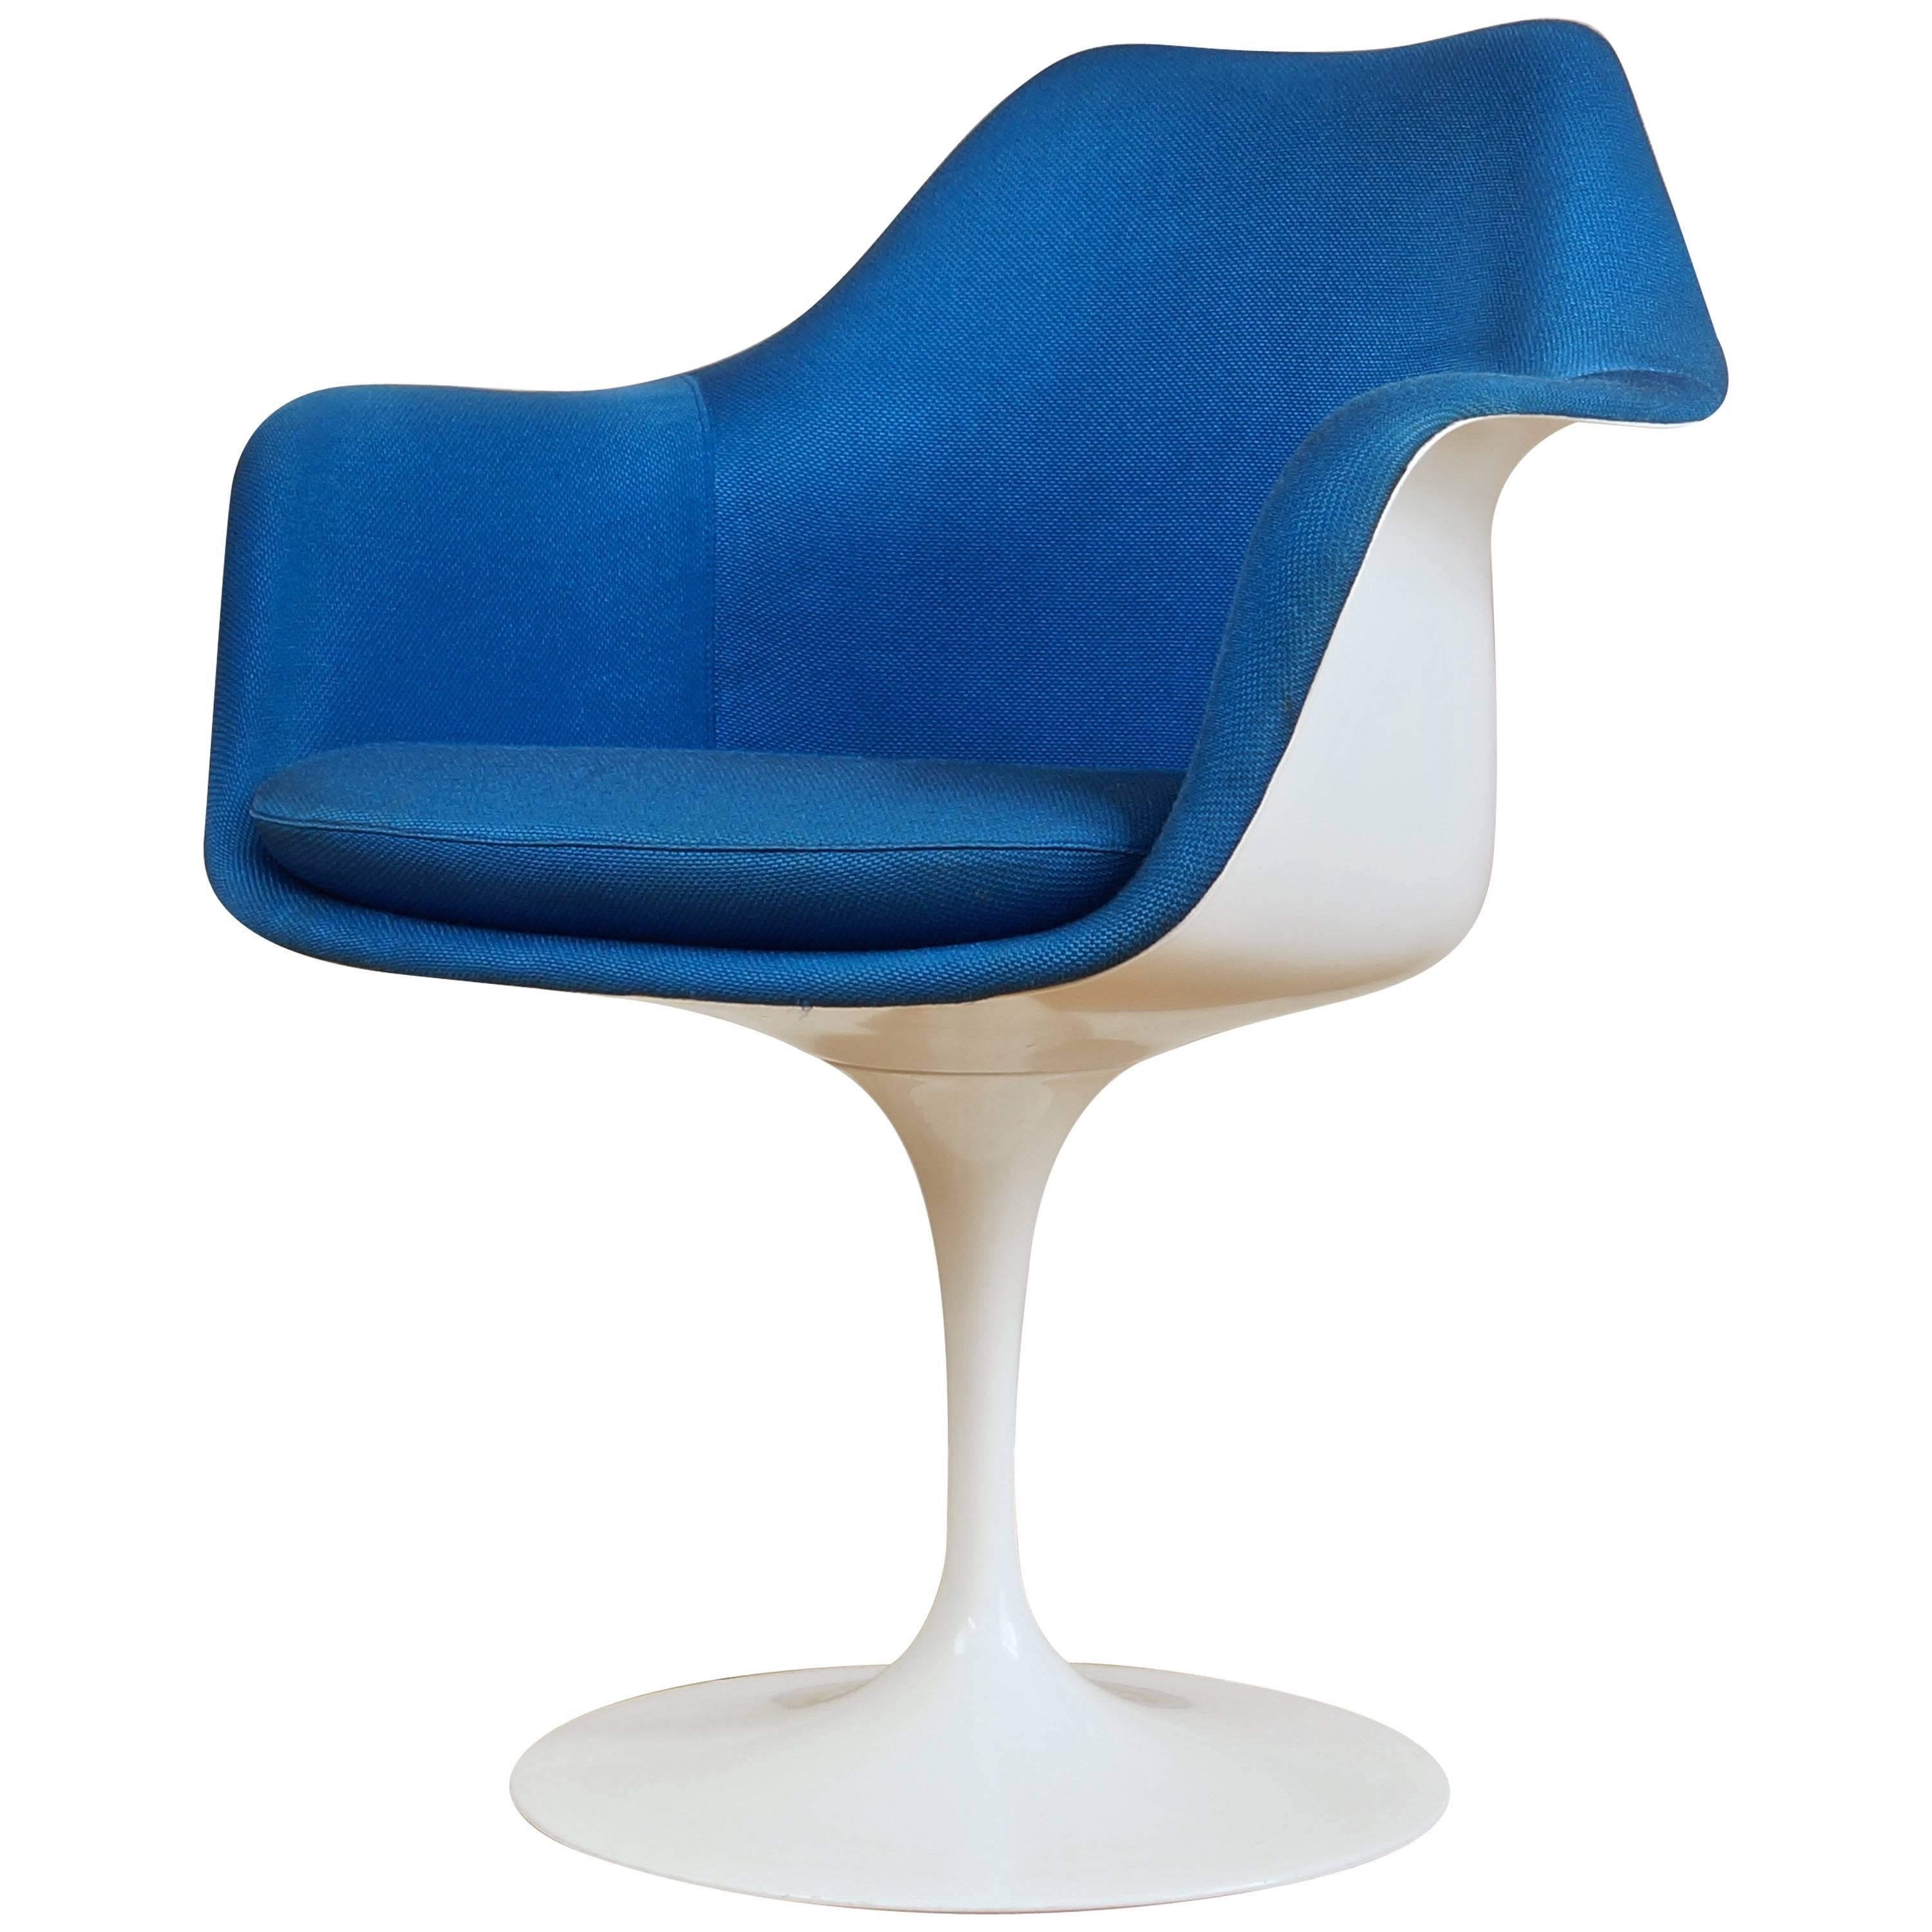 Vintage Tulip Chair / Armchair by Eero Saarinen for Knoll, Blue Upholstery